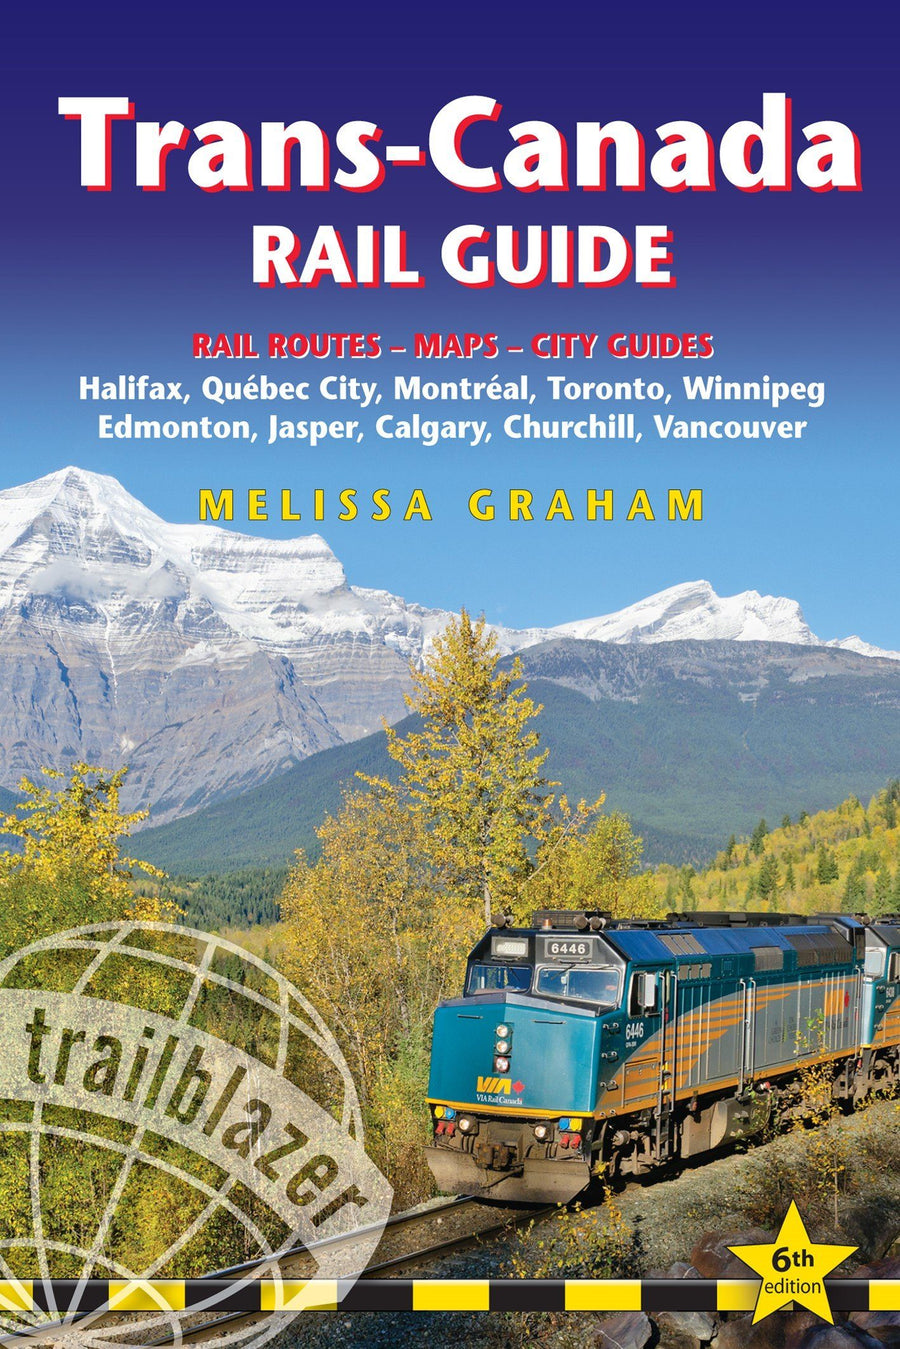 Guide de voyage (en anglais) - Trans-Canada rail guide | Trailblazer guide de voyage Trailblazer 